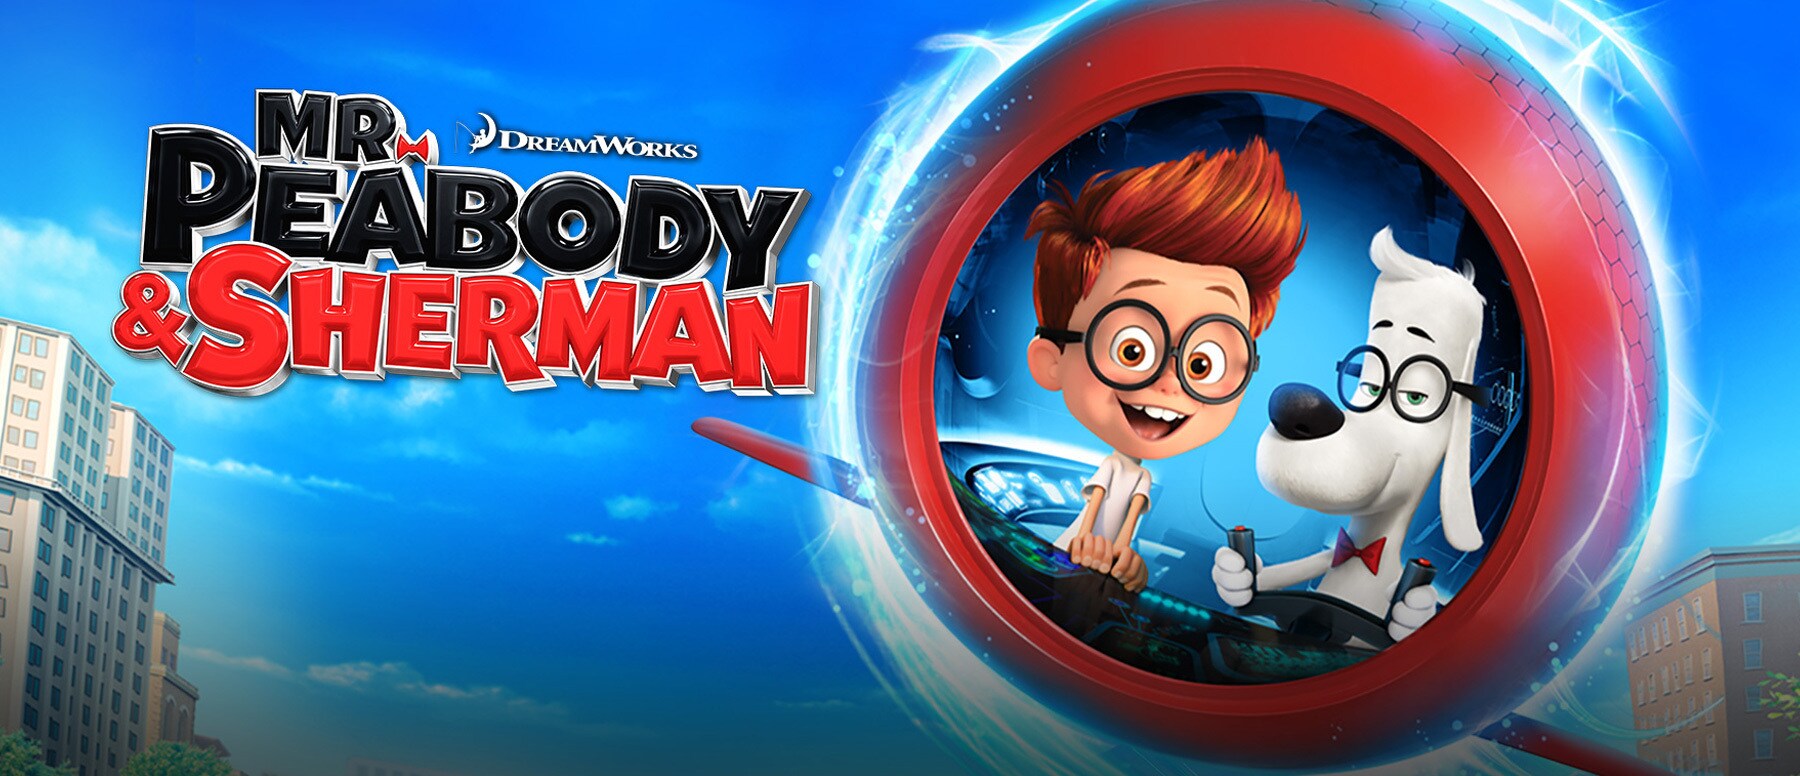 Mr. Peabody & Sherman Hero